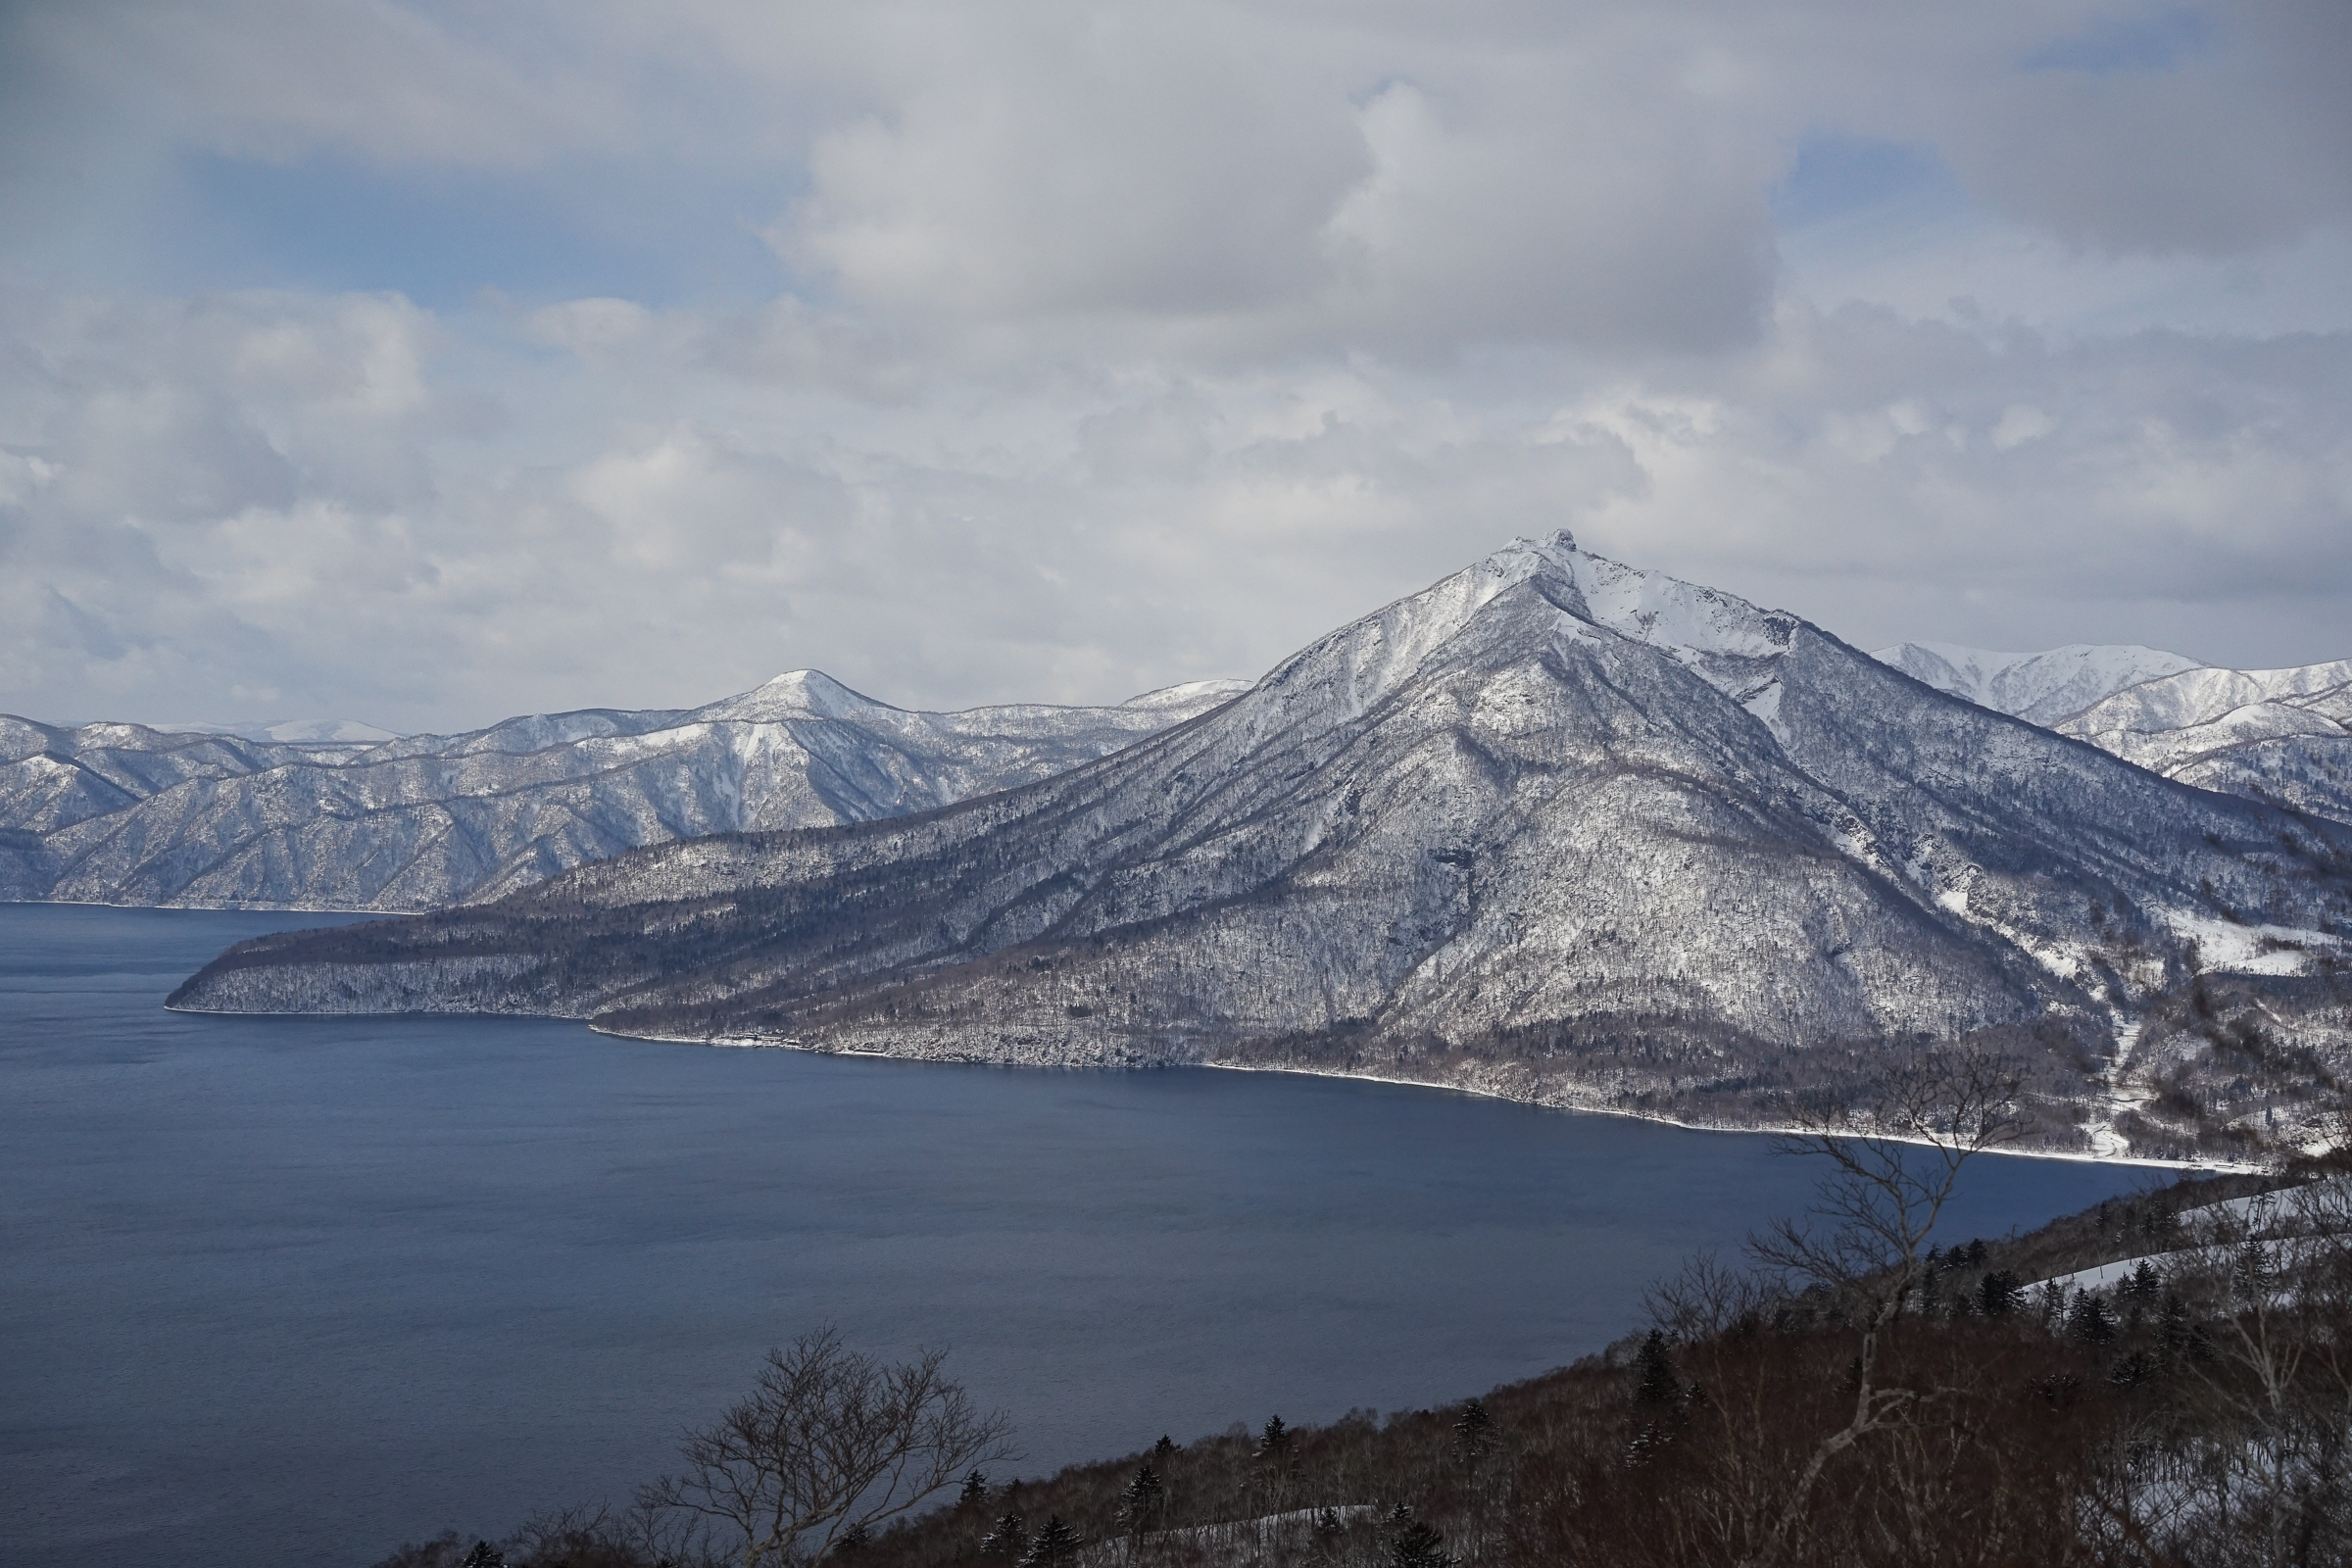 Mt. Eniwa and Lake Shikotsu viewed from Mt. Monbetsu in winter.